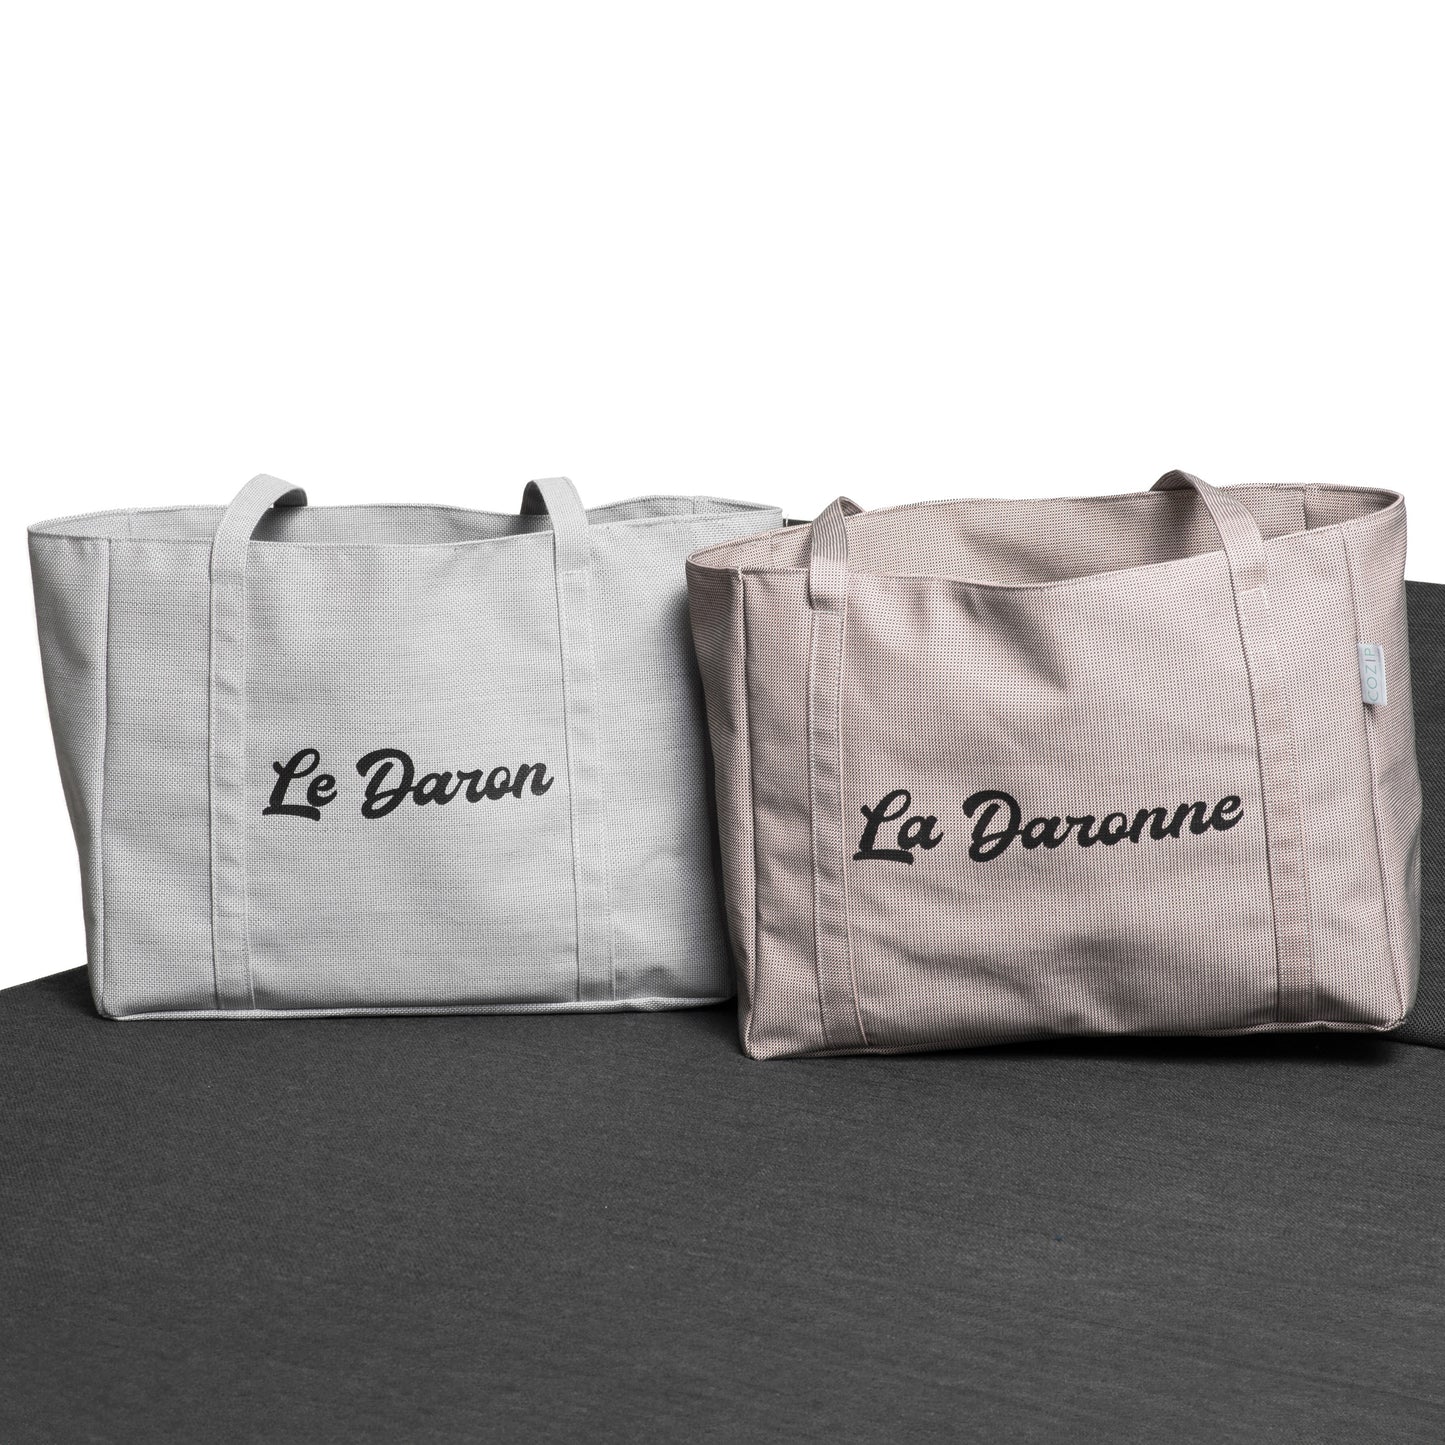 DARON/DARONNE BAGS